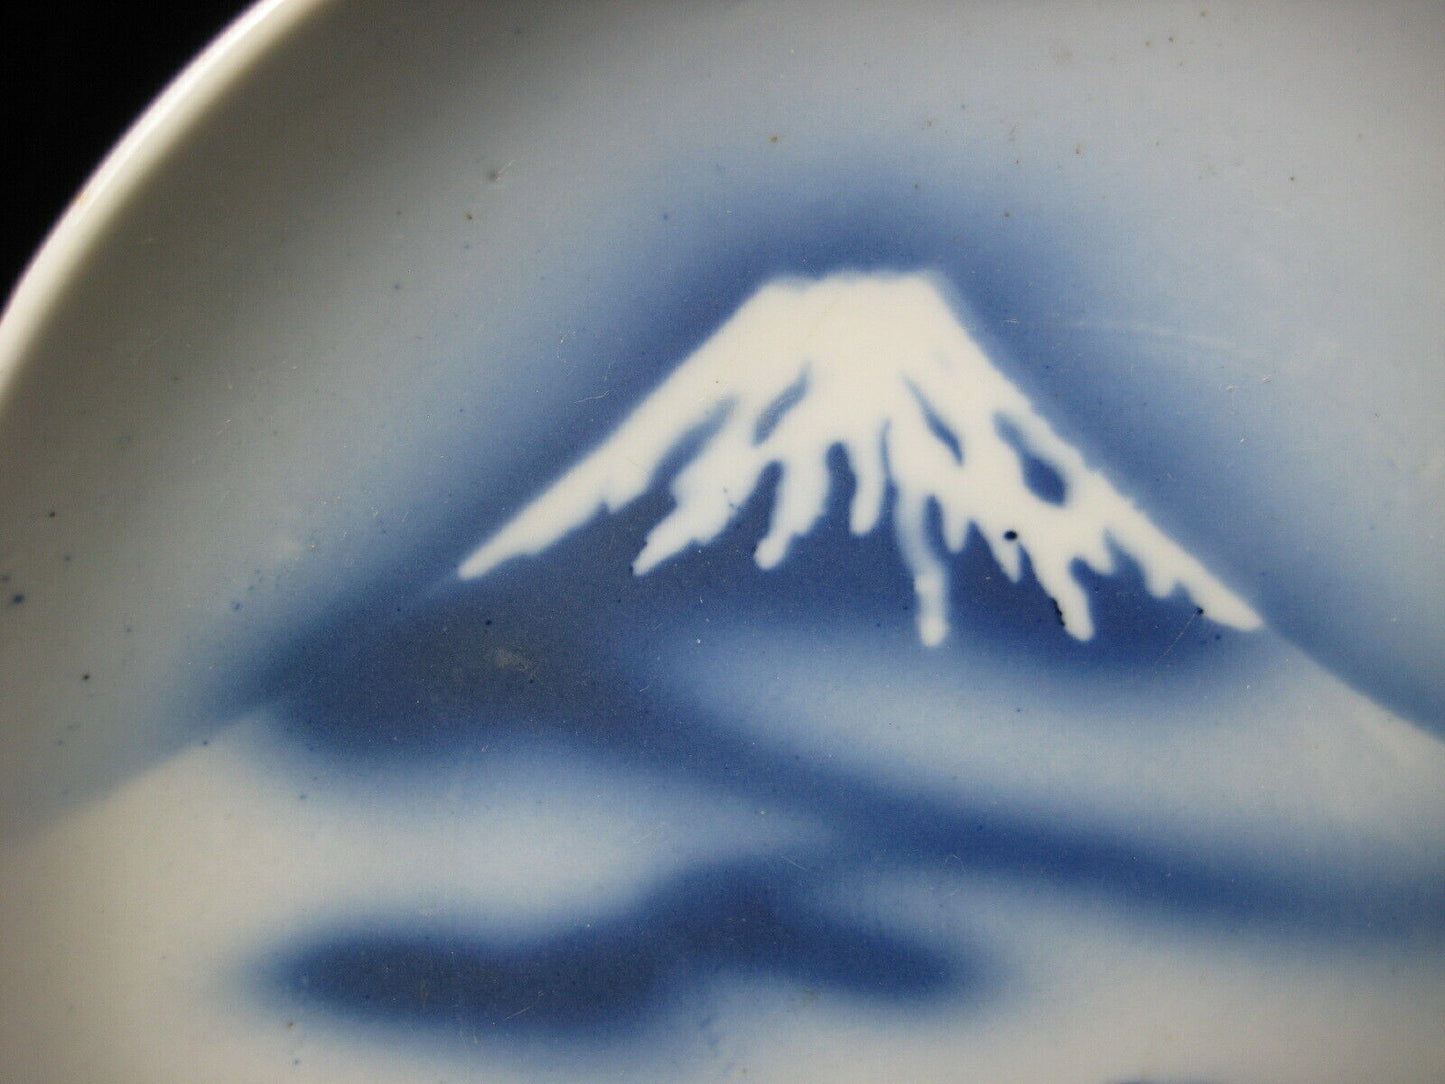 Antique Japanese Ceramic Hand Painted 7" Dish W/ Mt Fuji & Pine Trees